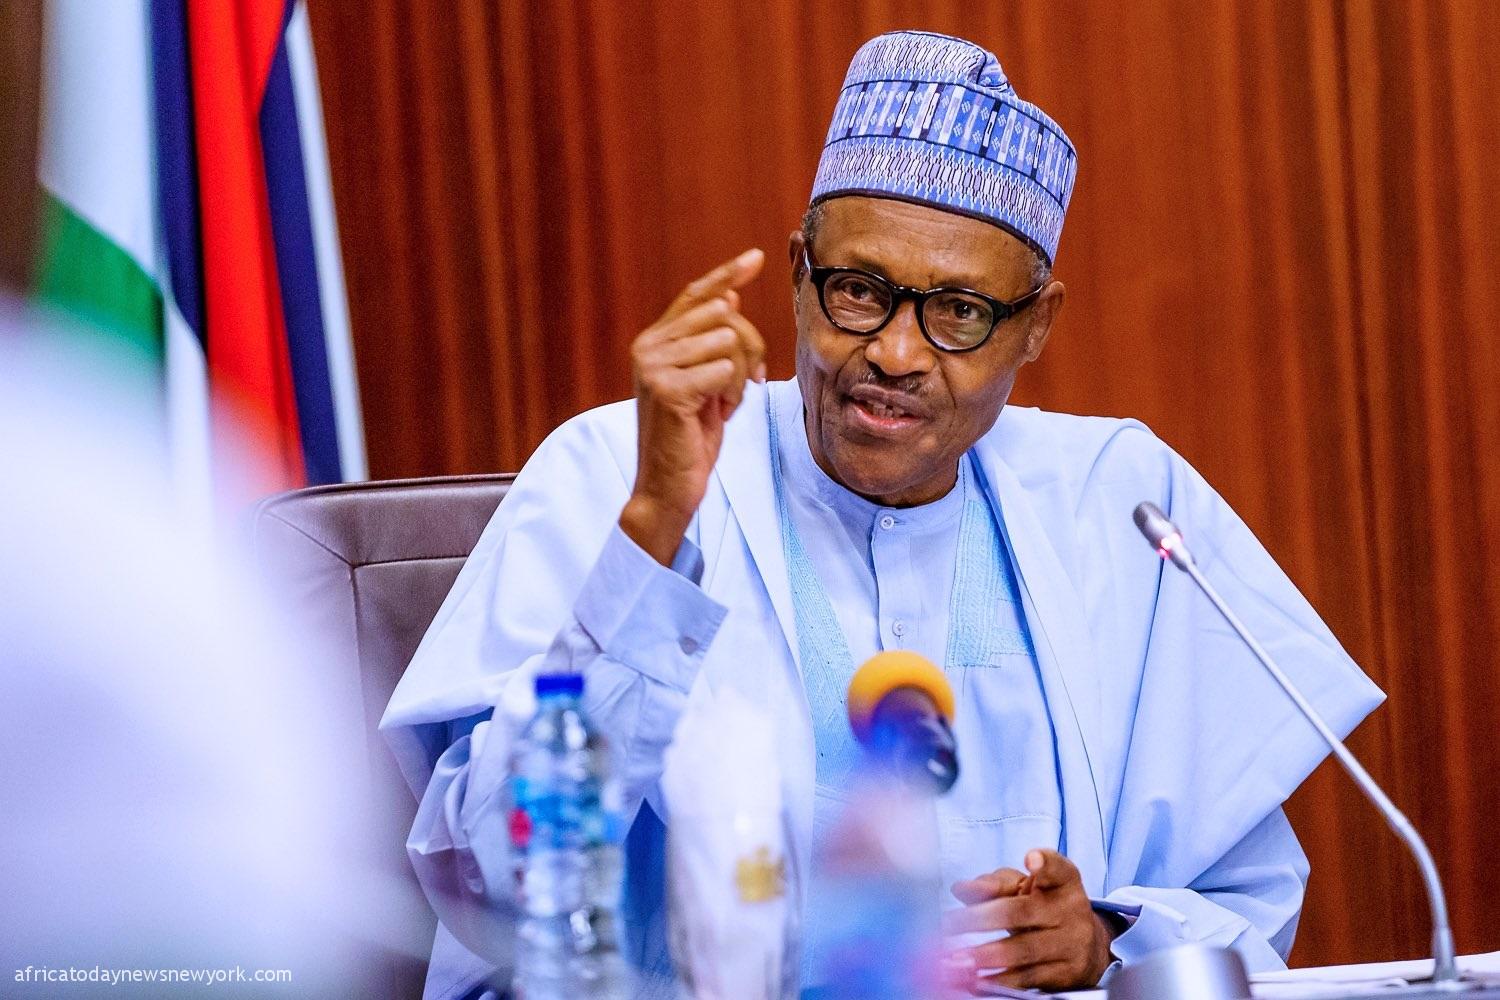 Power Supply Has Improved Under Buhari’s Govt - Presidency